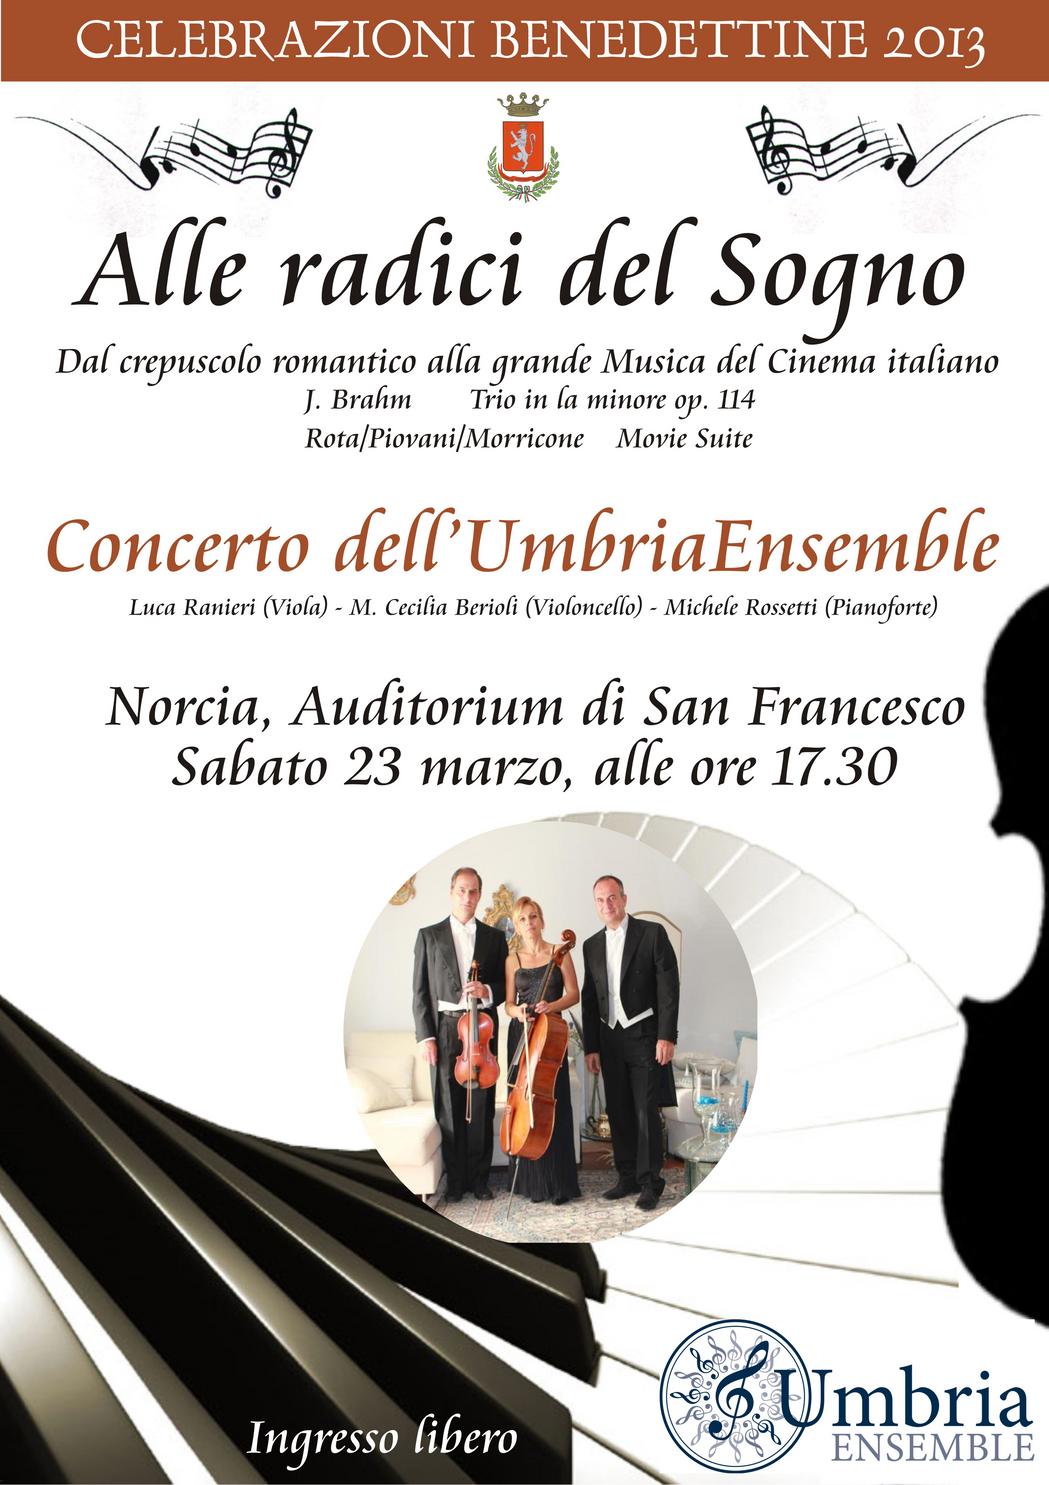 UmbriaEnsemble - Concerto a Norcia  - Sabato 23 Marzo 2013, ore 17.30, Auditorium di S. Francesco 